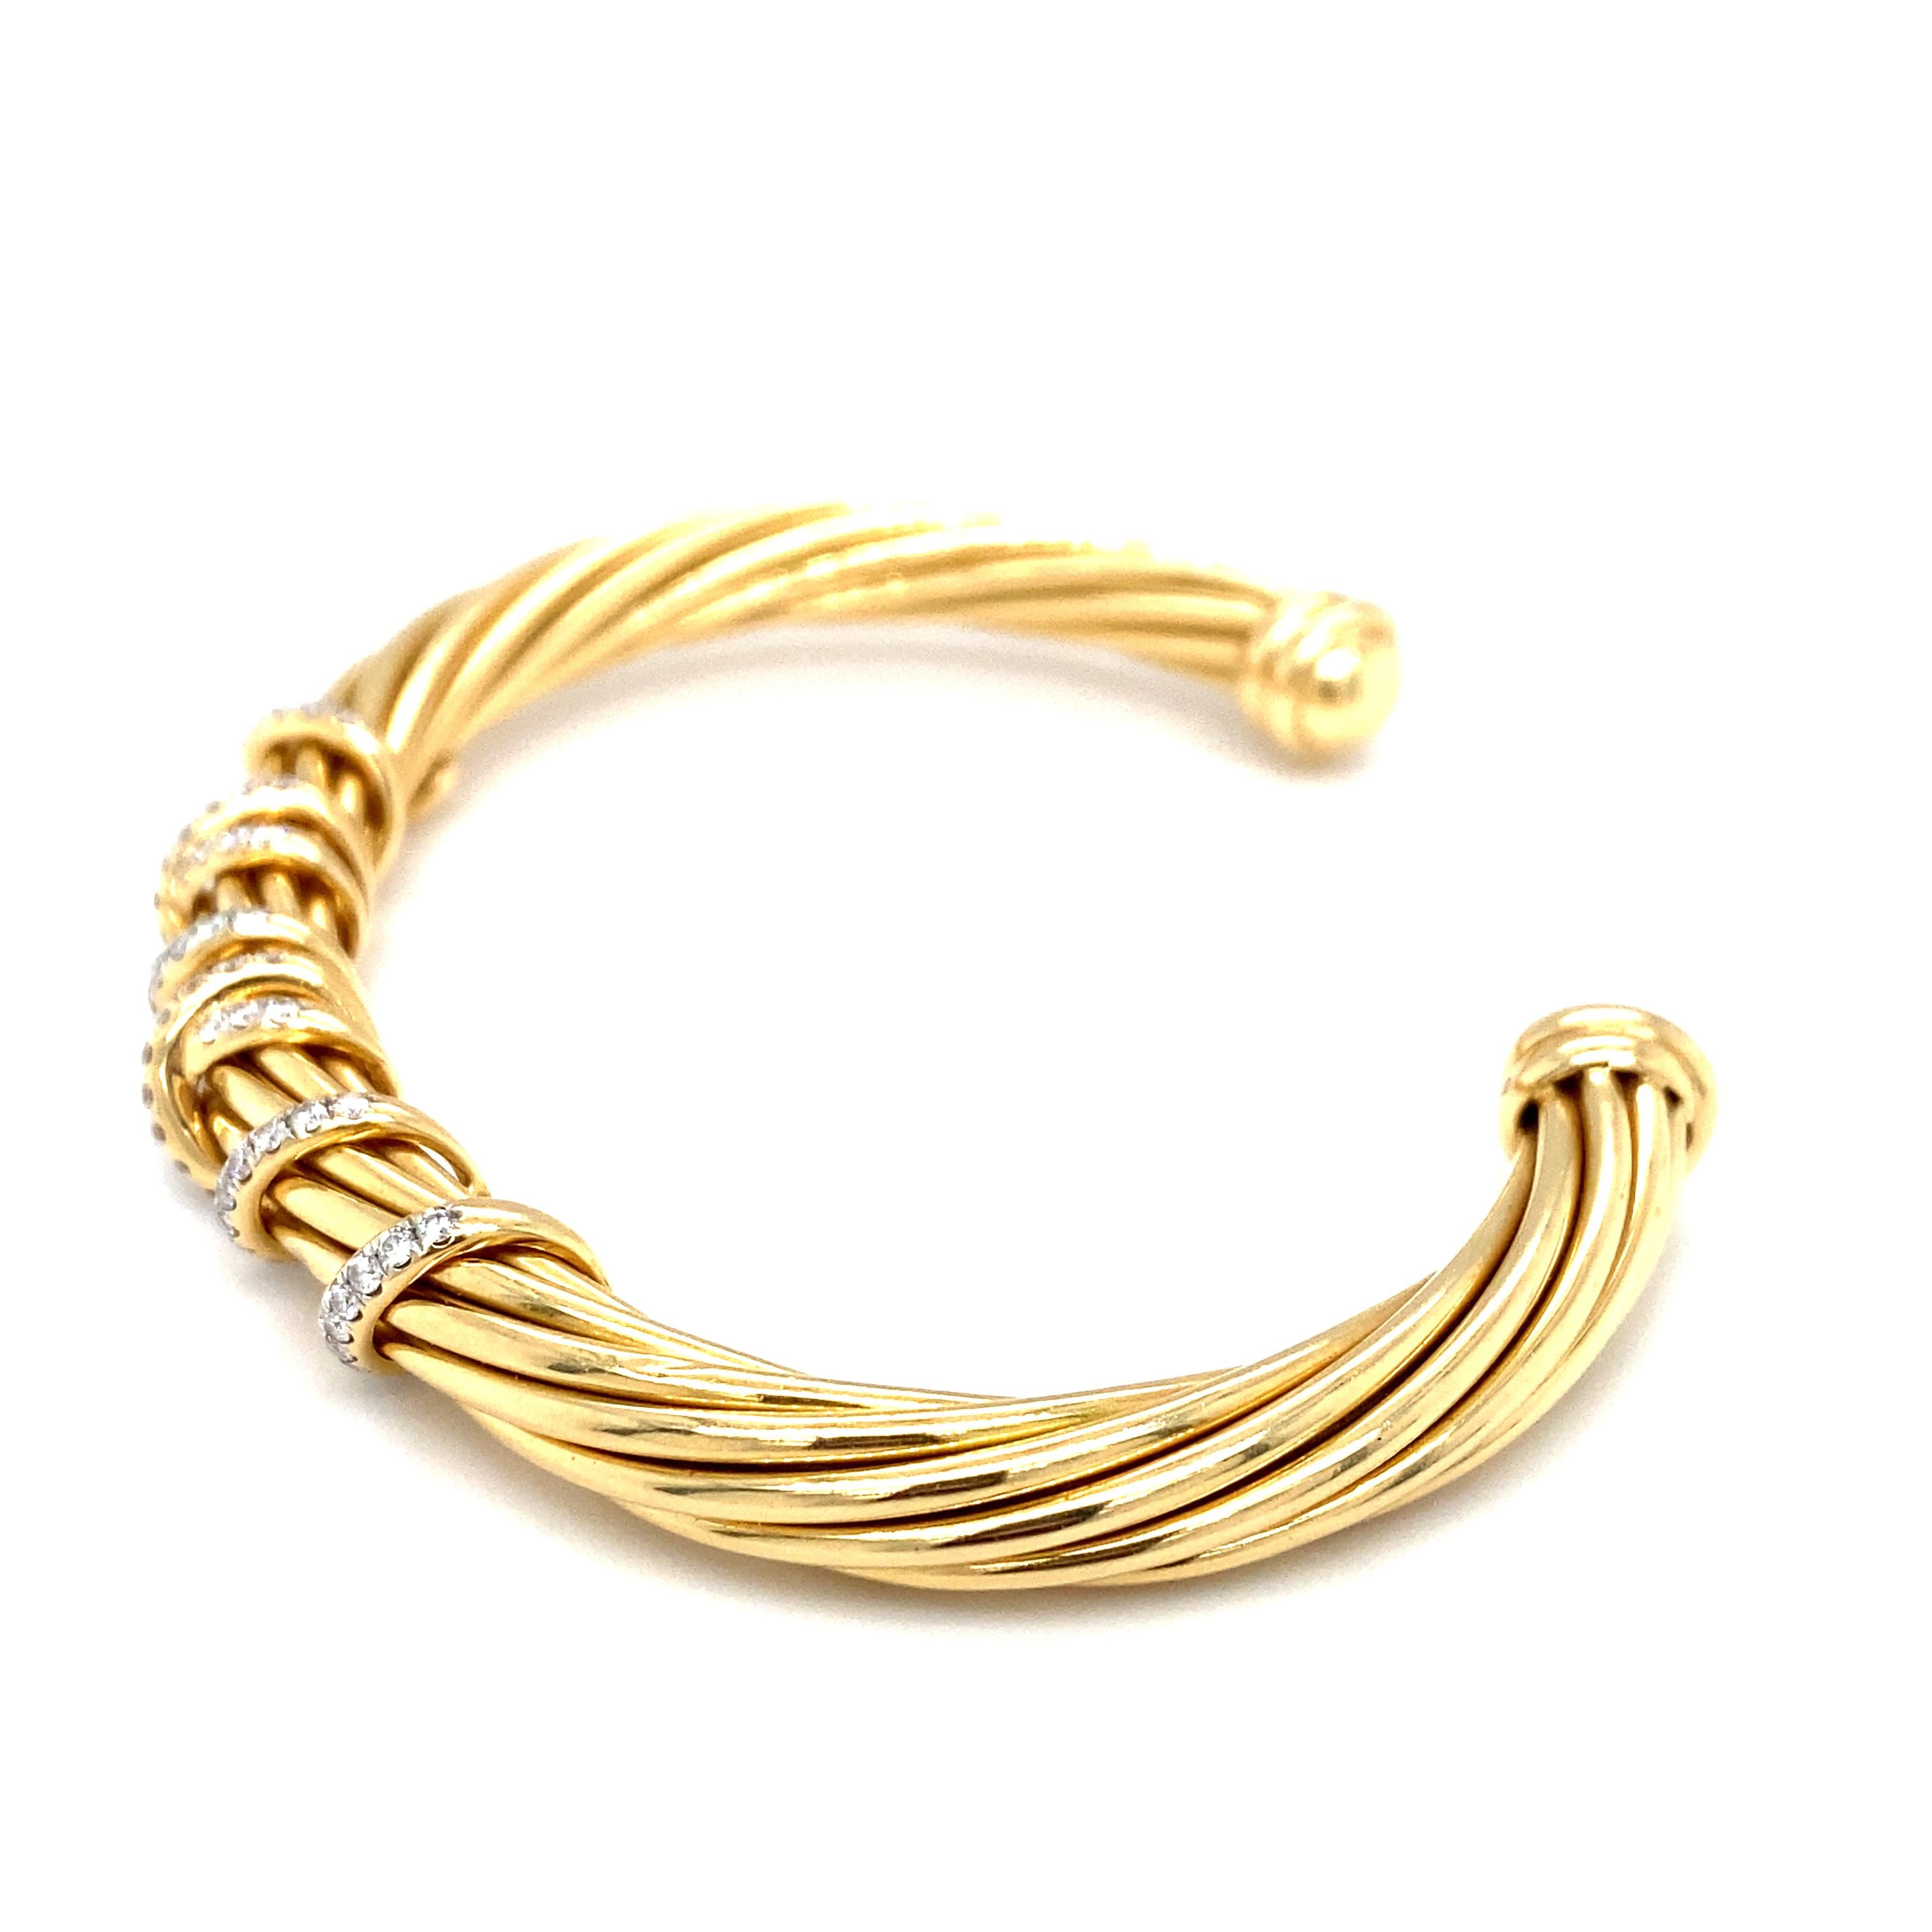 Women's or Men's David Yurman Helena Center Station Diamond Cuff Bracelet in 18 Karat Yellow Gold